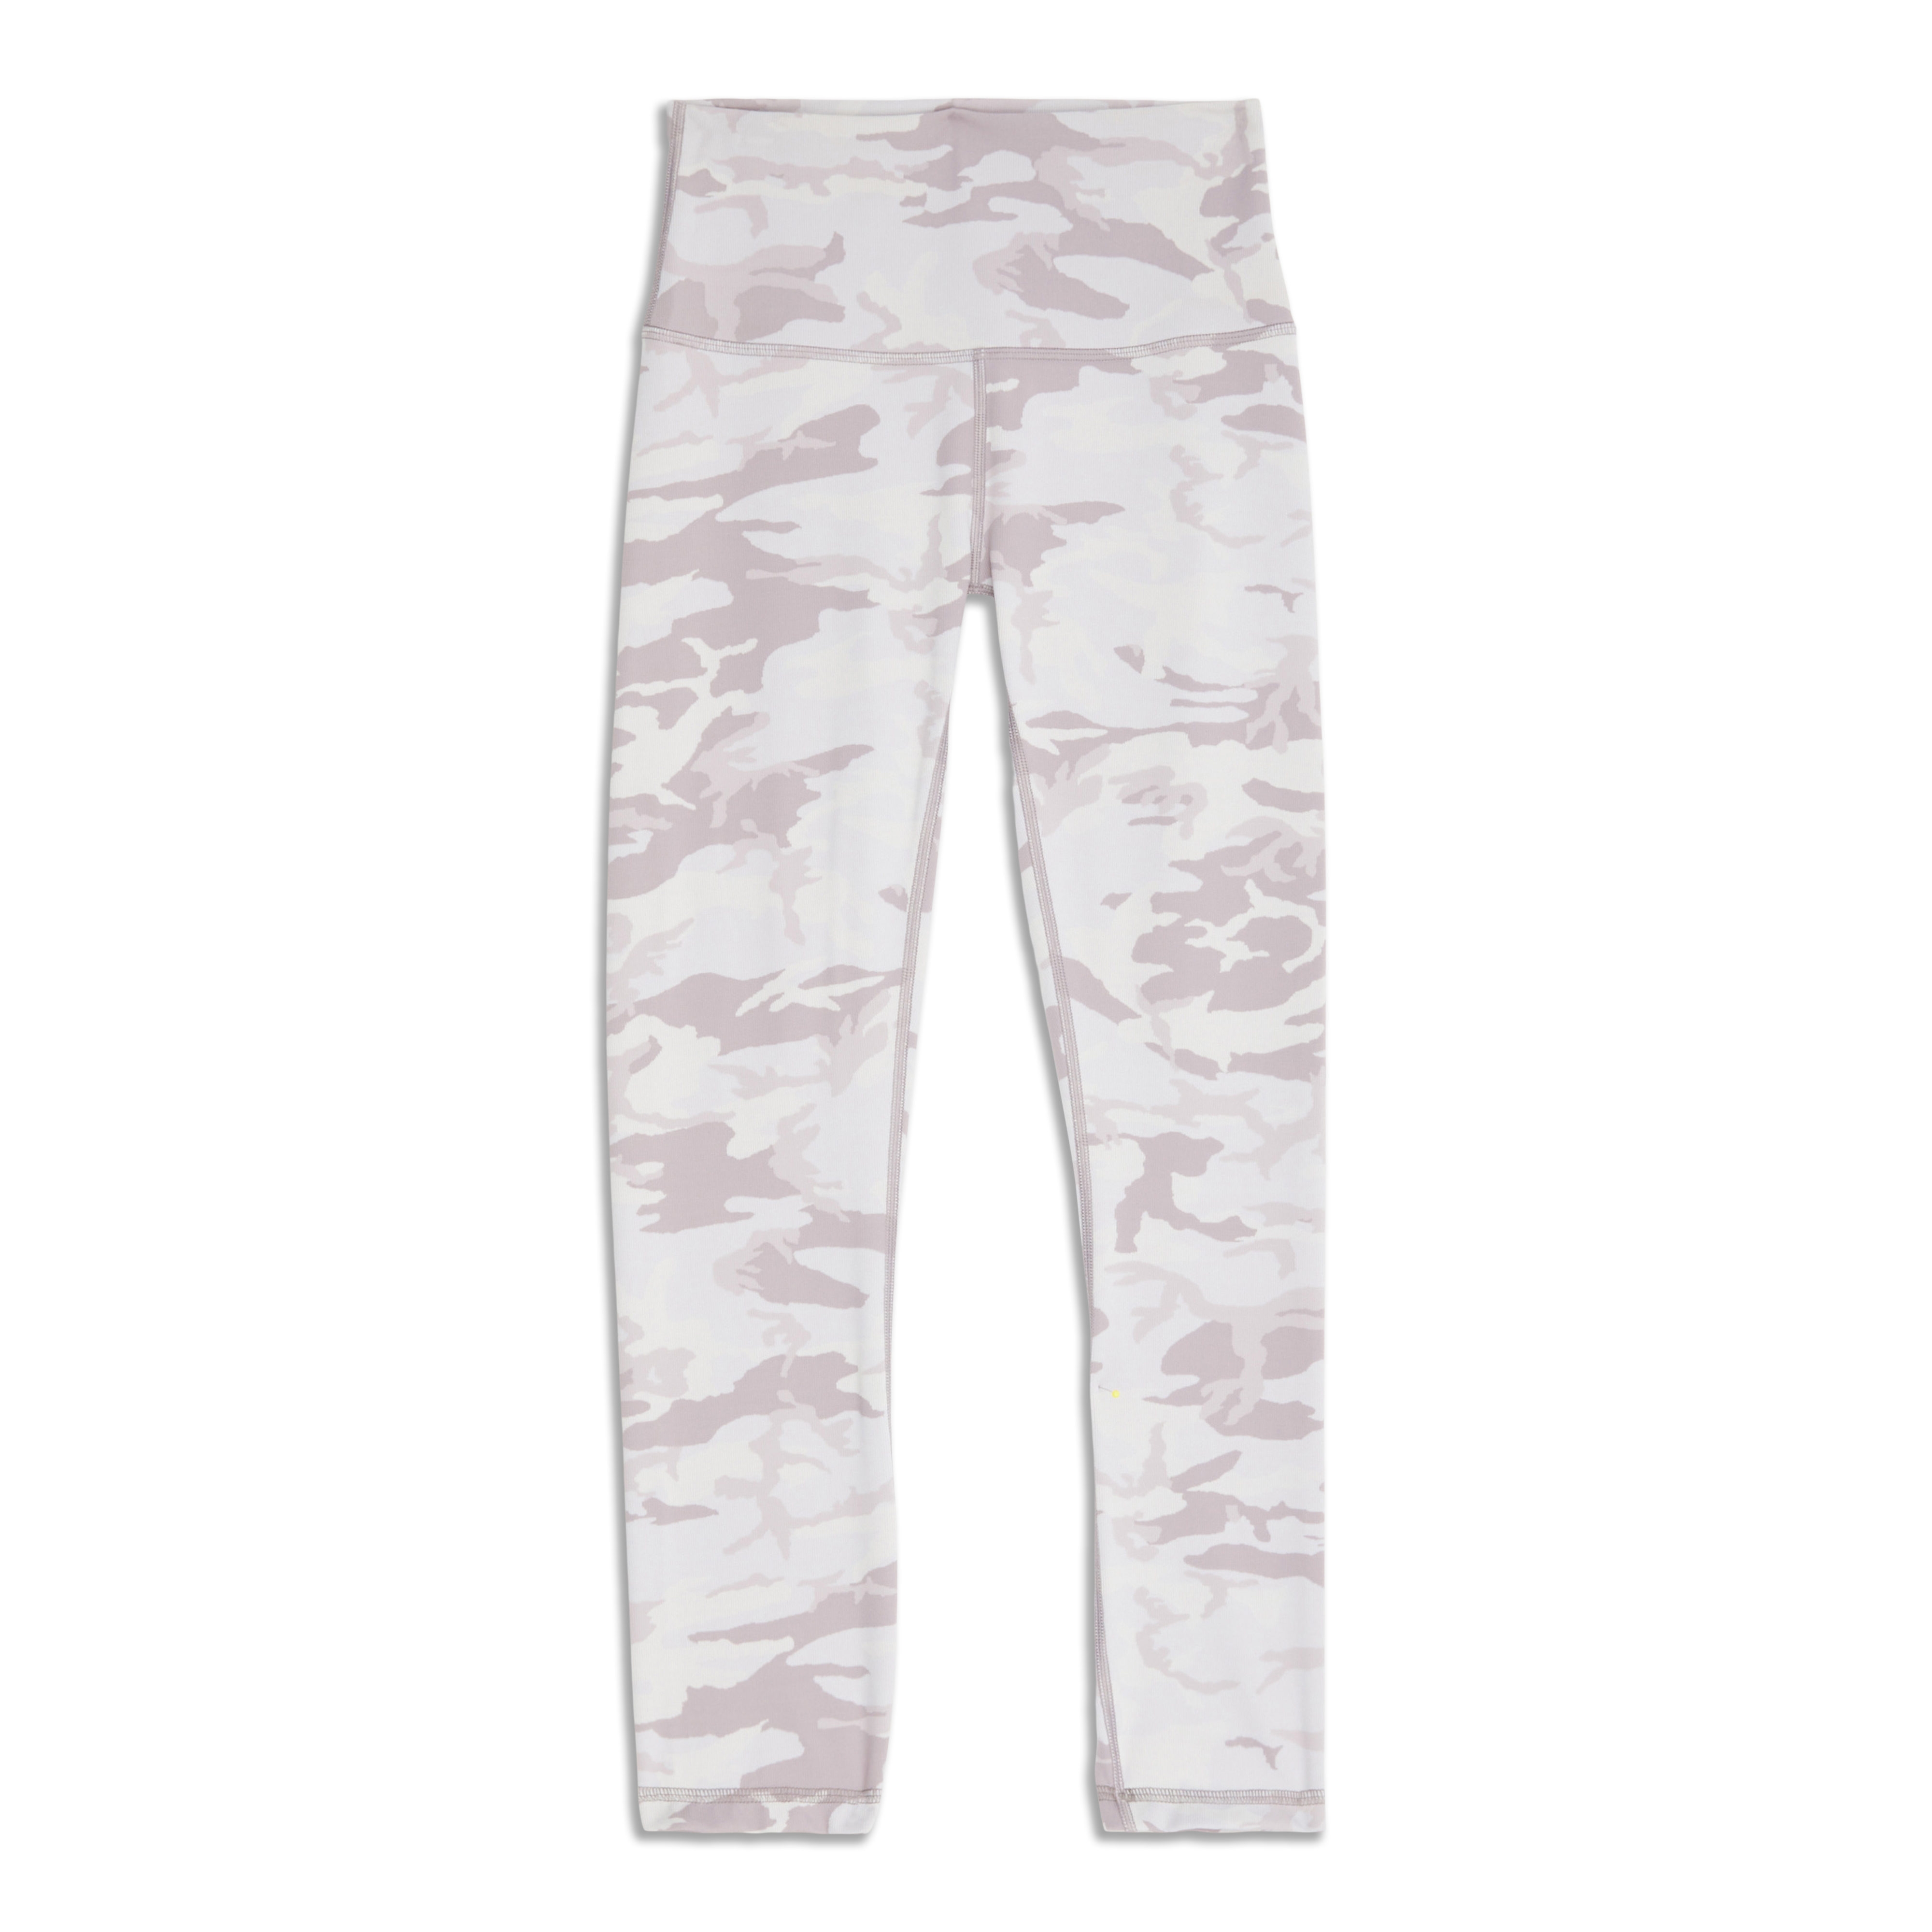 Lululemon Alpine White and Gray Camo Leggings  Grey lululemon leggings, Camo  leggings outfit, Grey leggings outfit